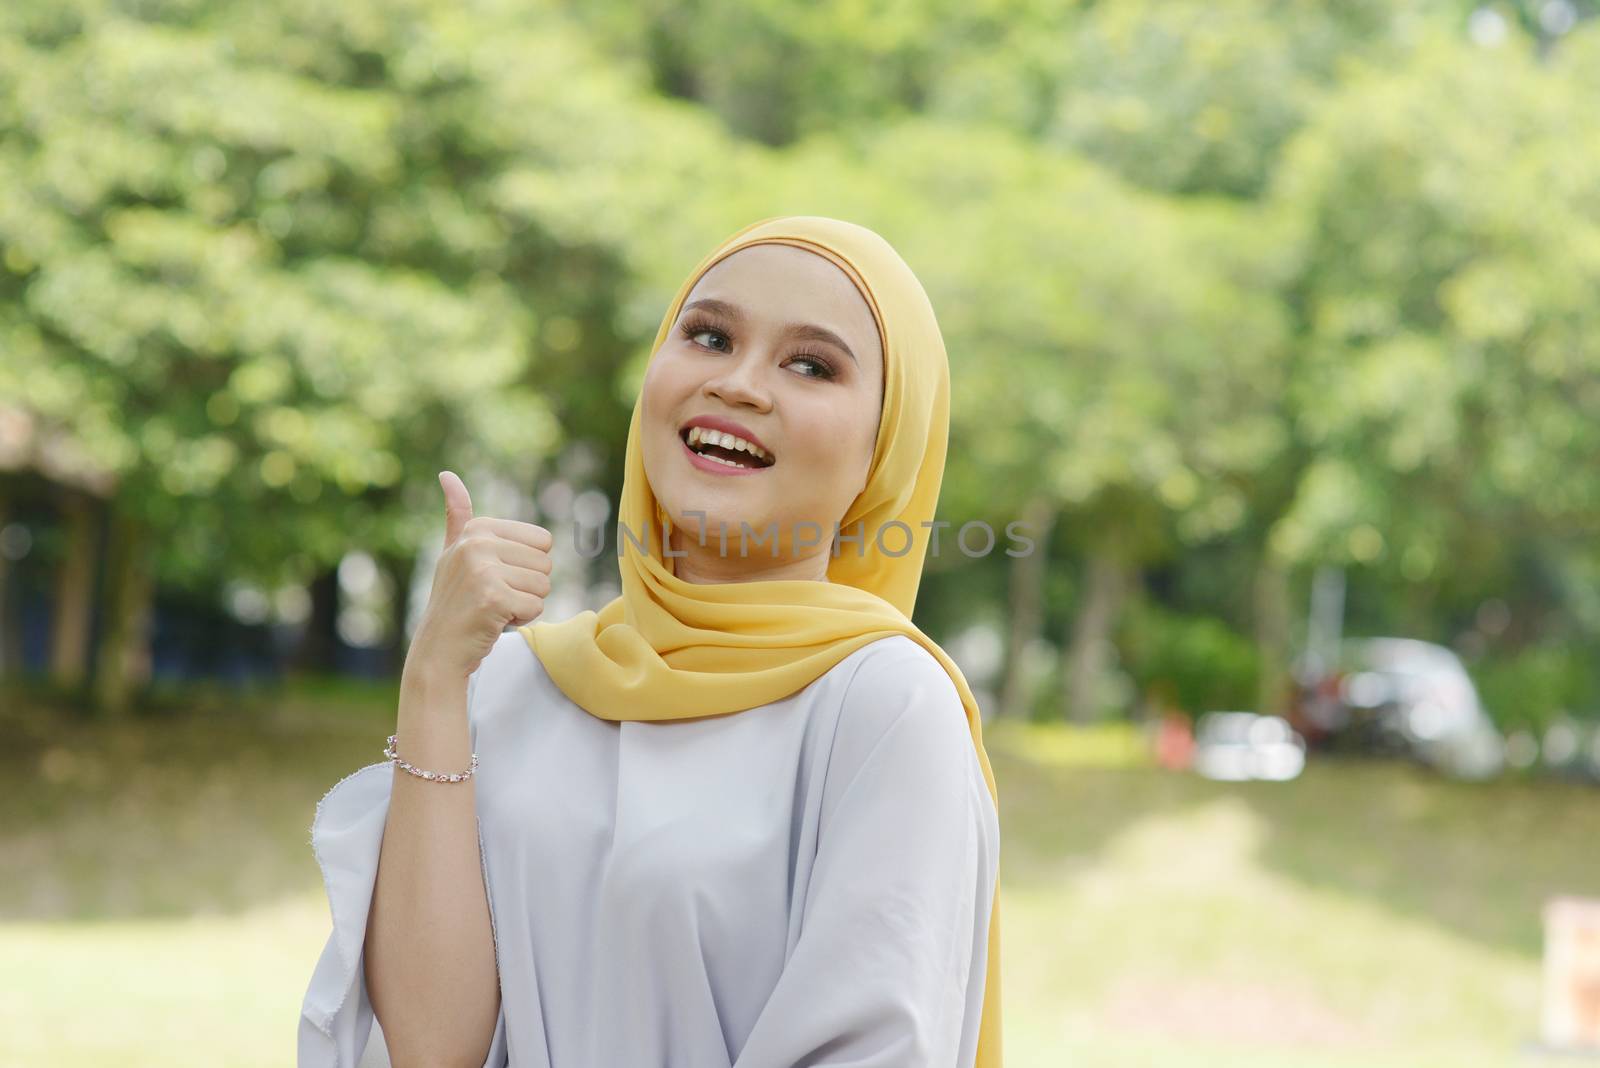 Muslim girl thumb up by szefei